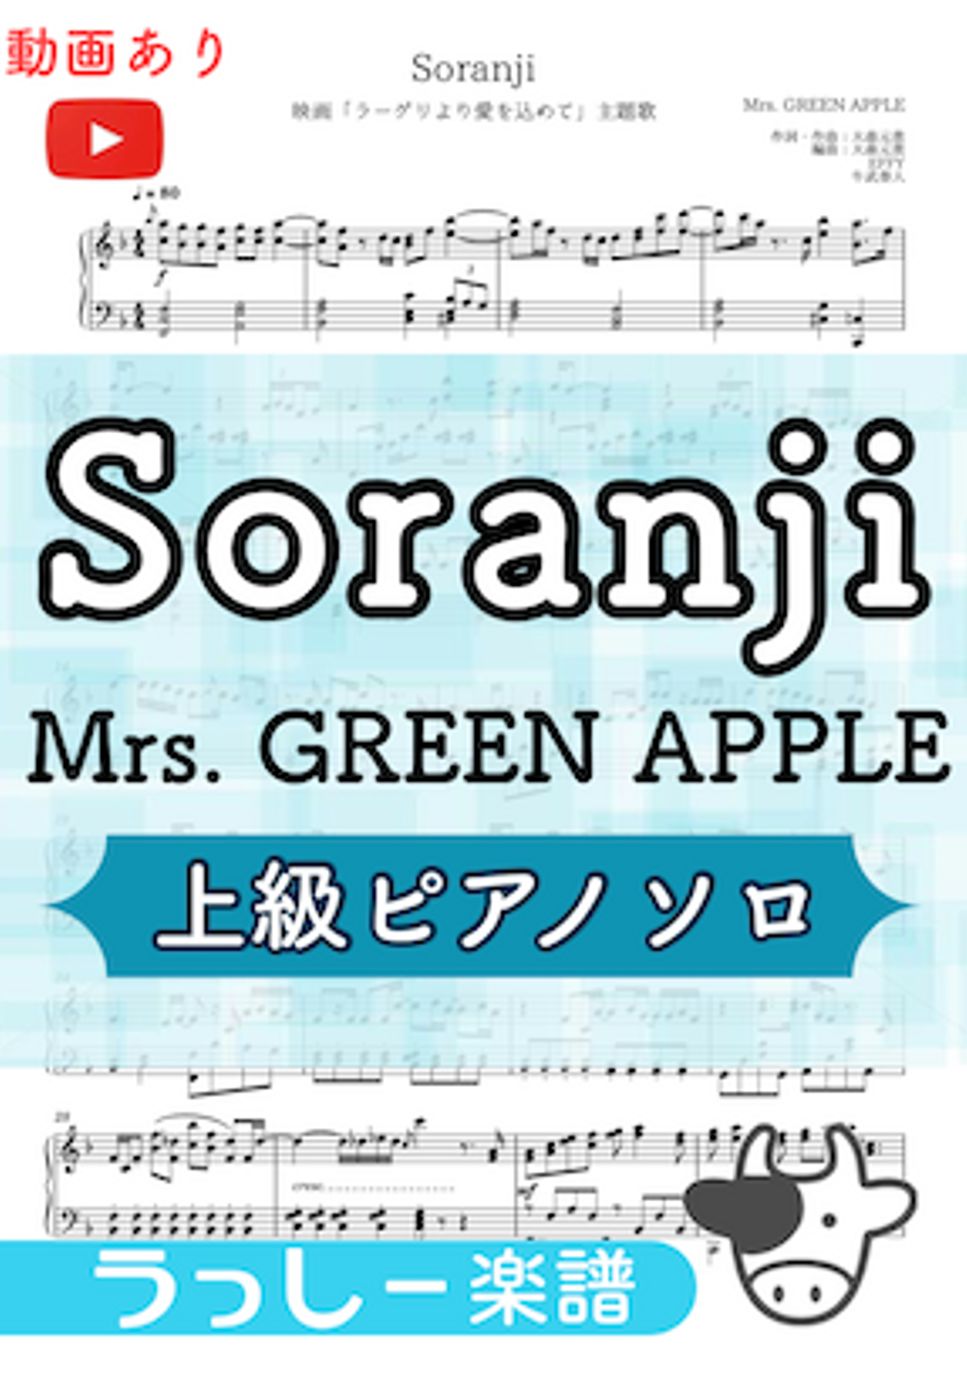 Mrs. GREEN APPLE - Soranji (映画〈ラーゲリより愛を込めて〉主題歌) by 牛武奏人